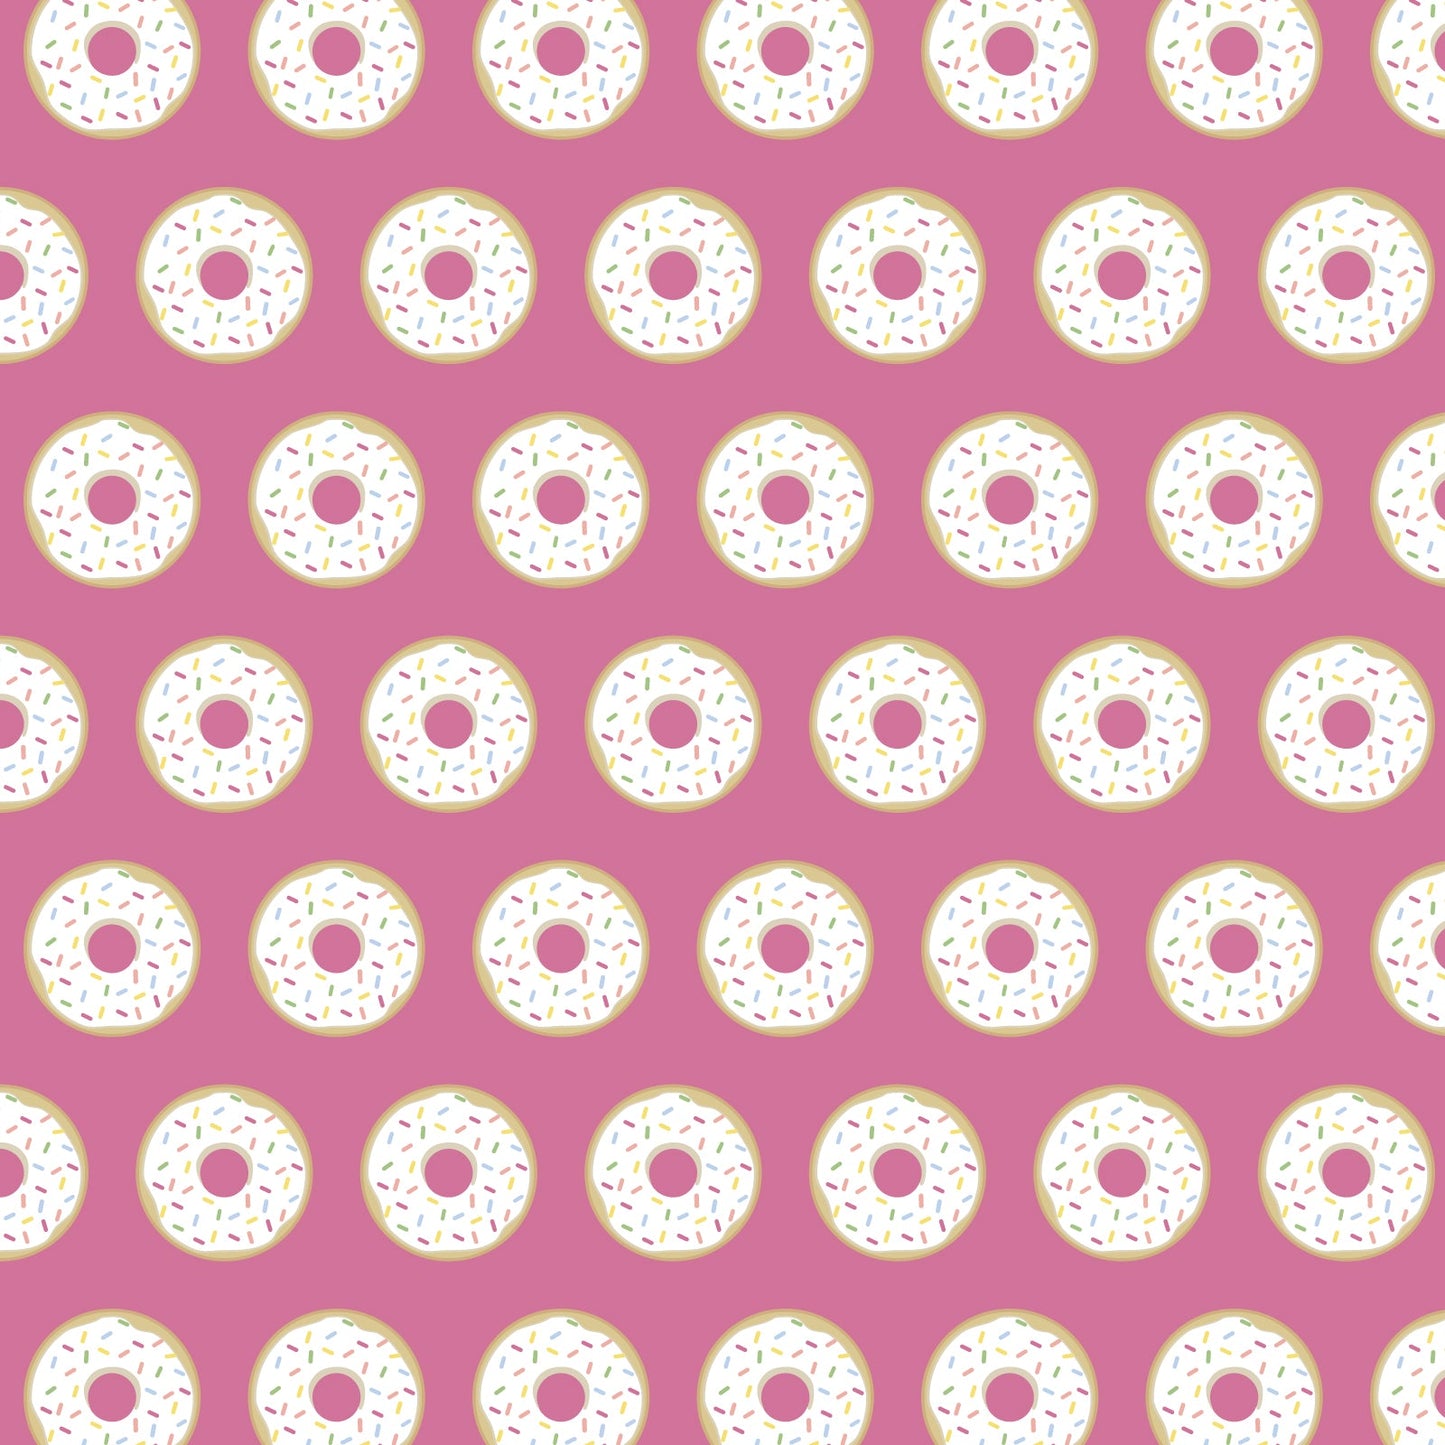 Girls' Alden Pima Cotton Pajama Pant Set - Donuts Pink